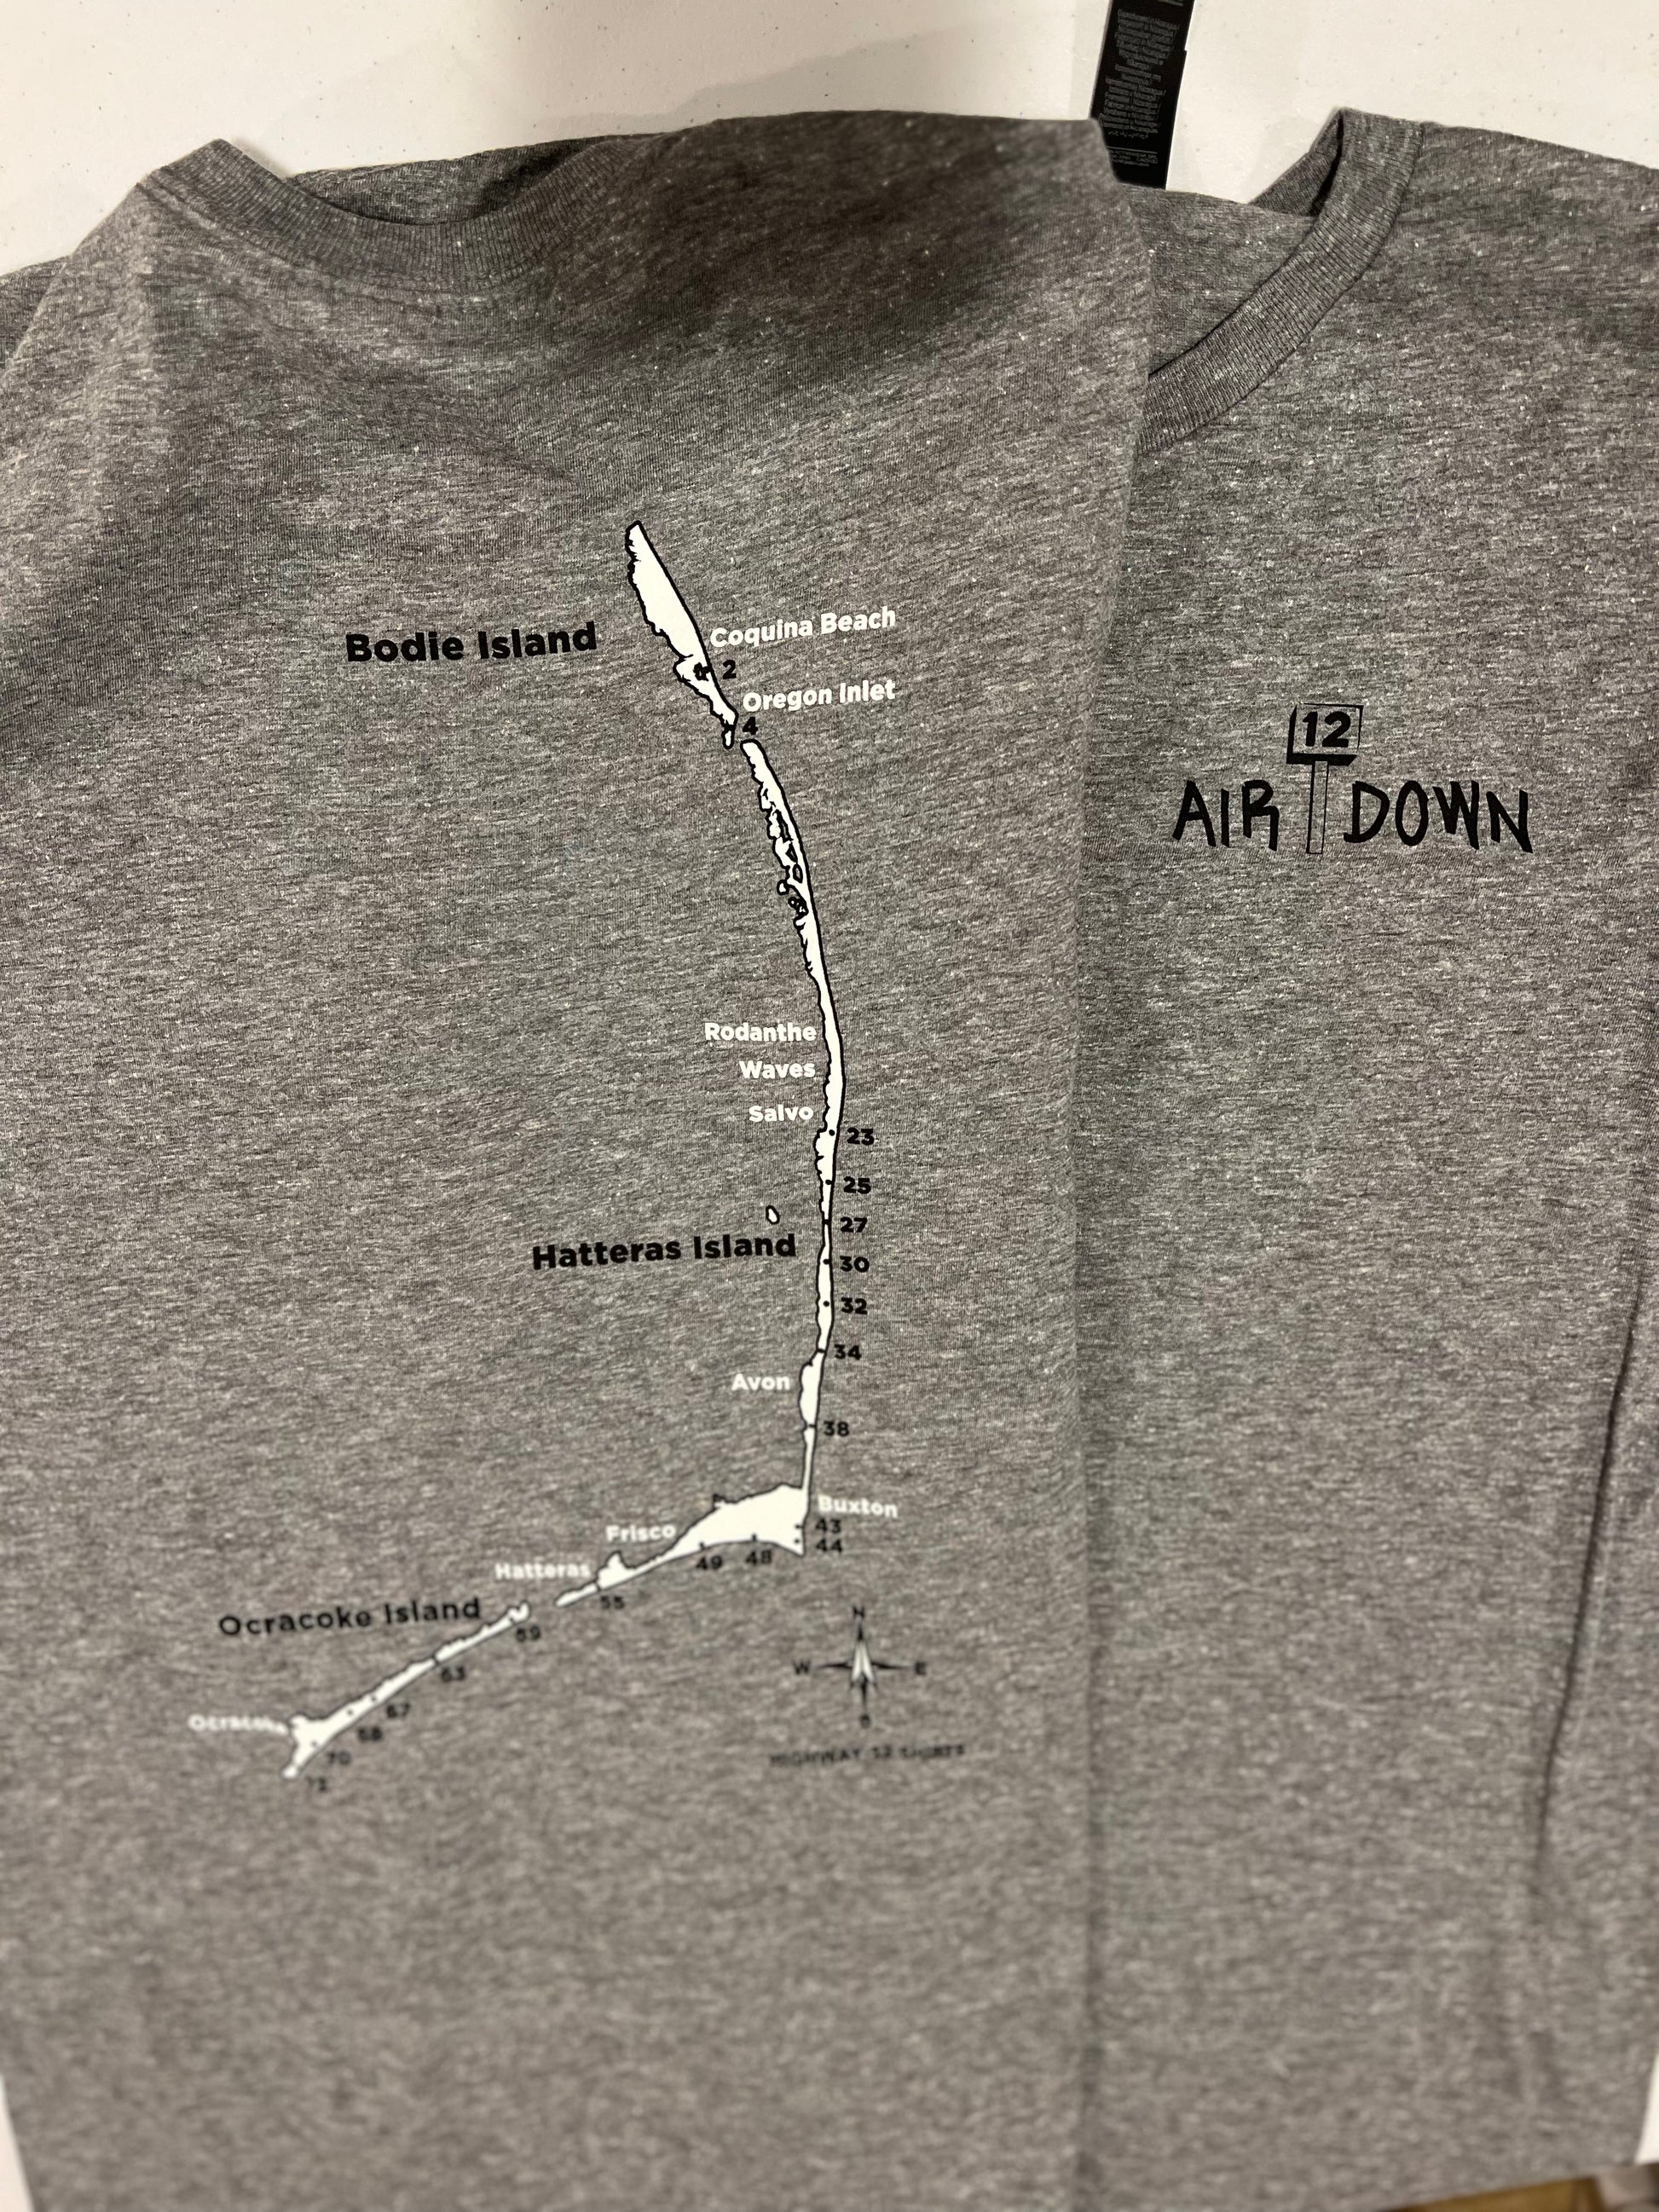 Air Down short sleeve - Highway 12 Shirts